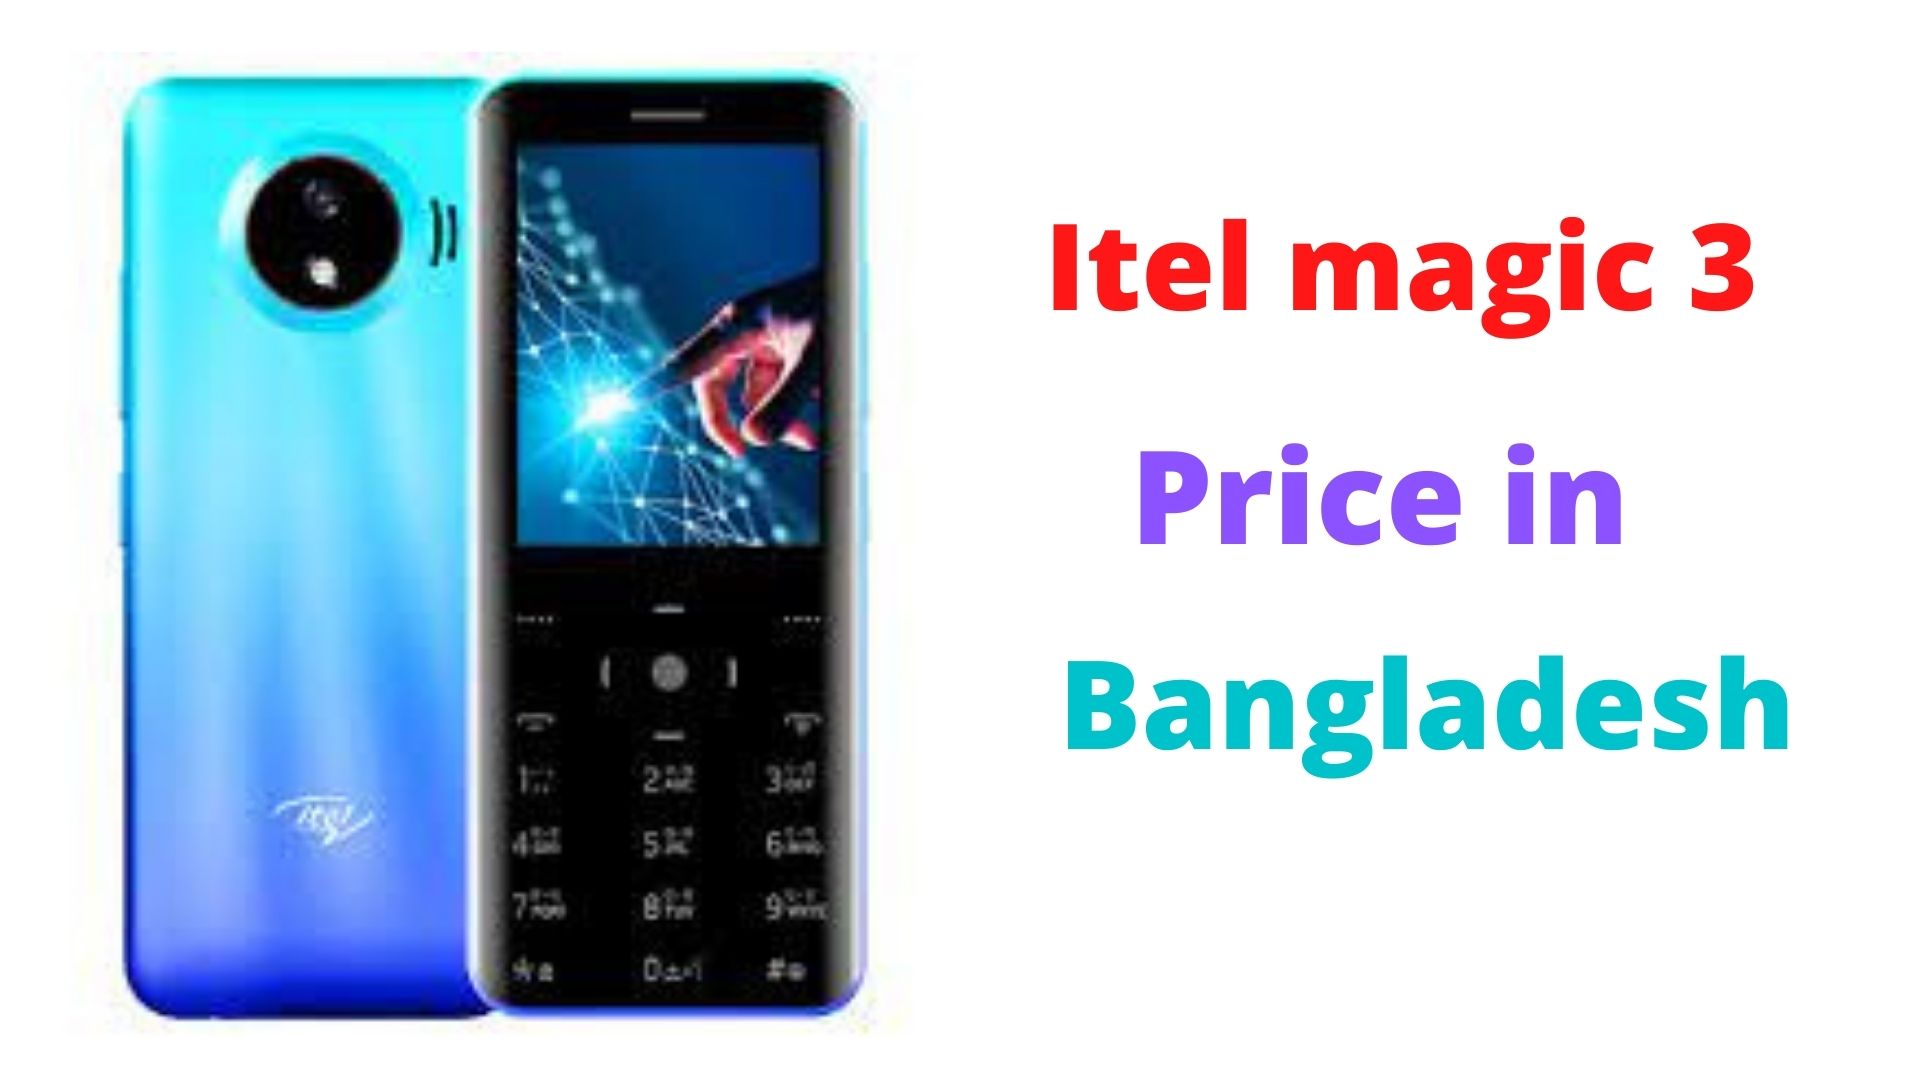 Itel magic 3 Price In Bangladesh